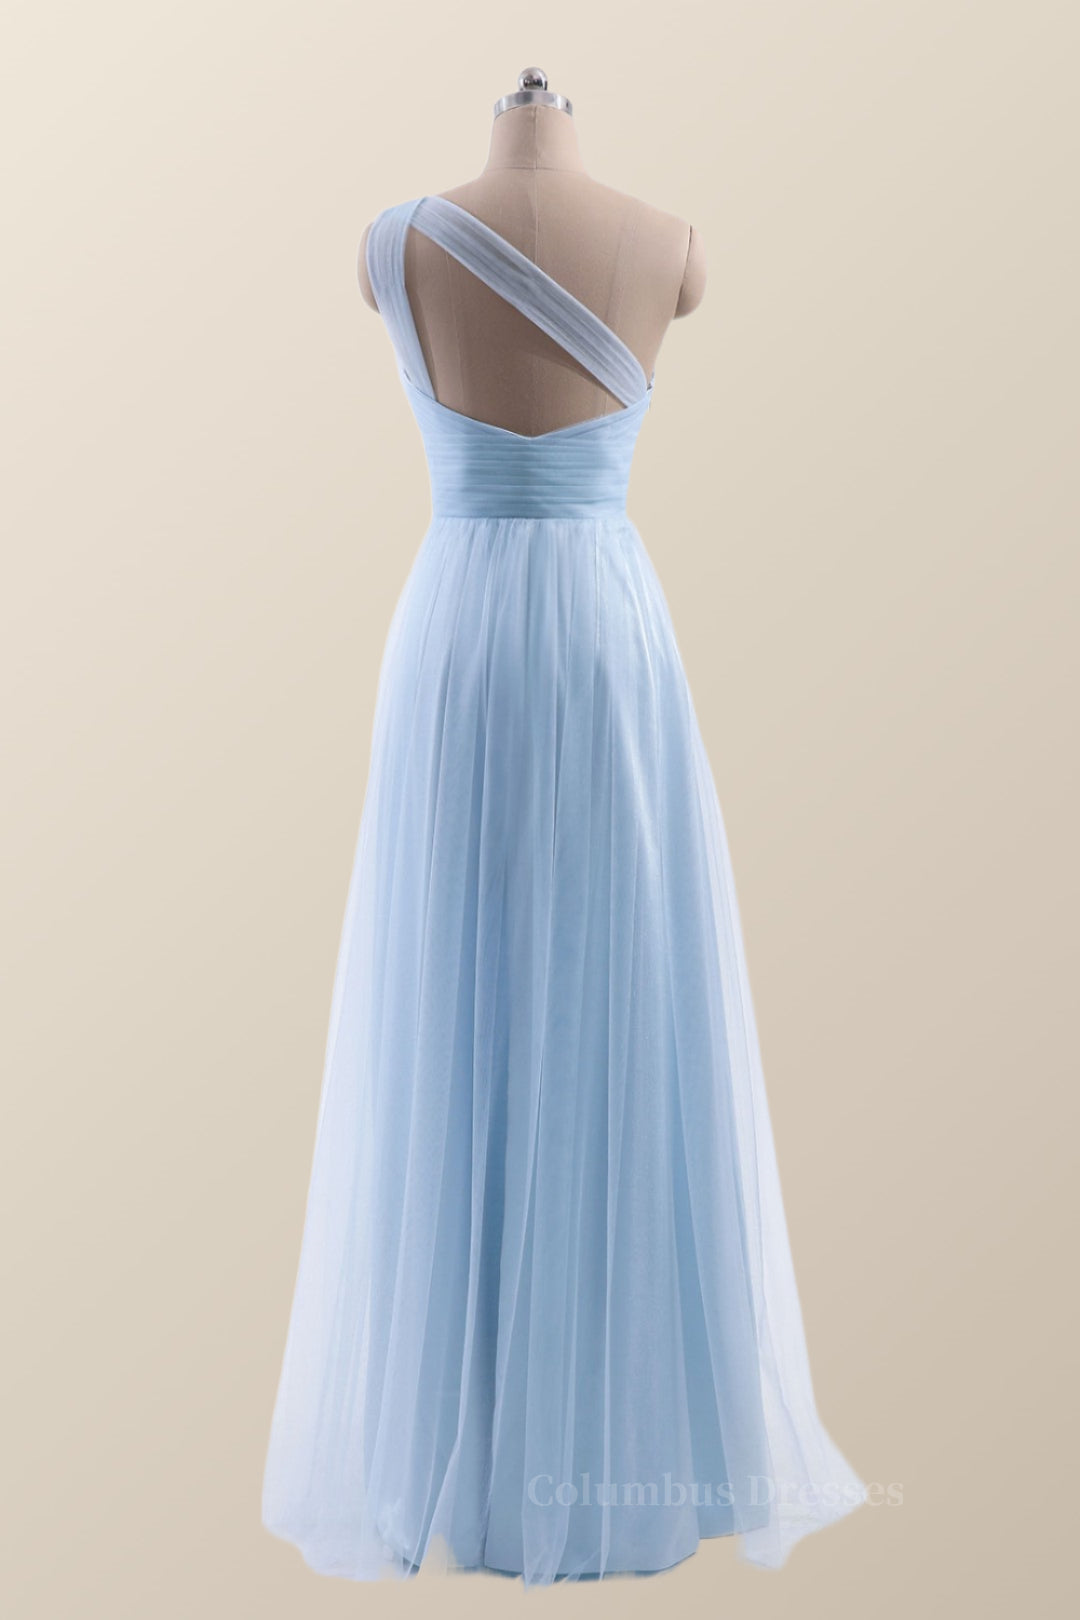 Cute Prom Dress, One Shoulder Light Blue Tulle A-line Bridesmaid Dress